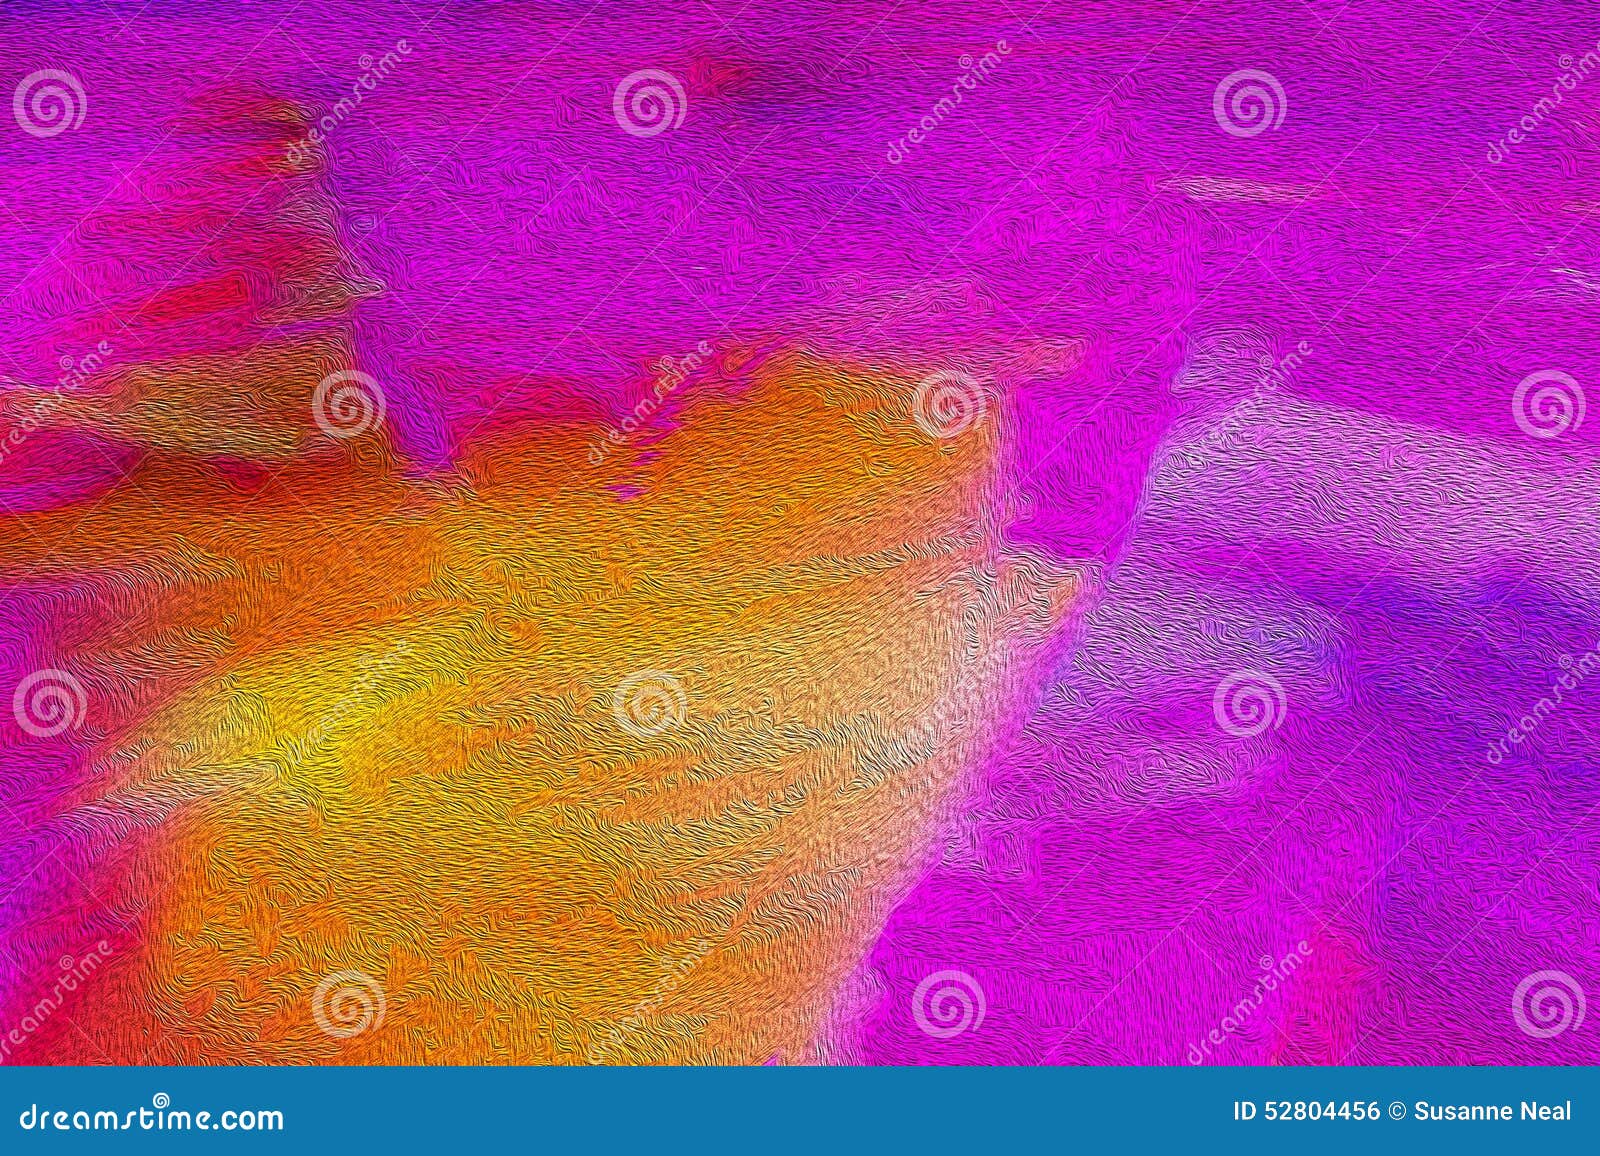 Hot Pink And Orange Textured Background Stock Photo - Image: 52804456